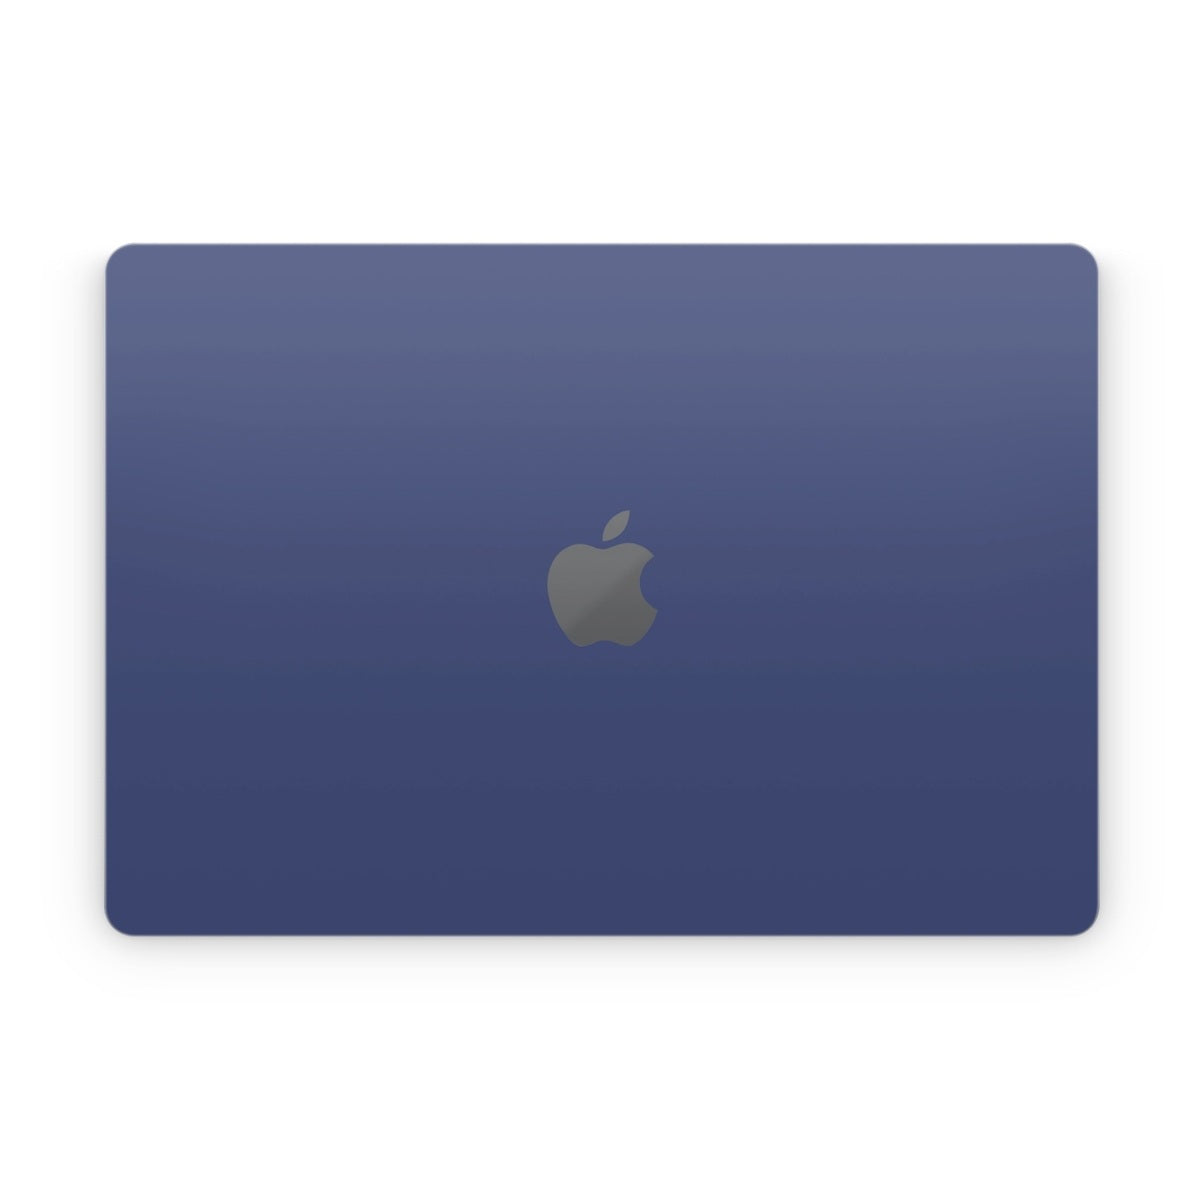 Solid State Cobalt - Apple MacBook Skin